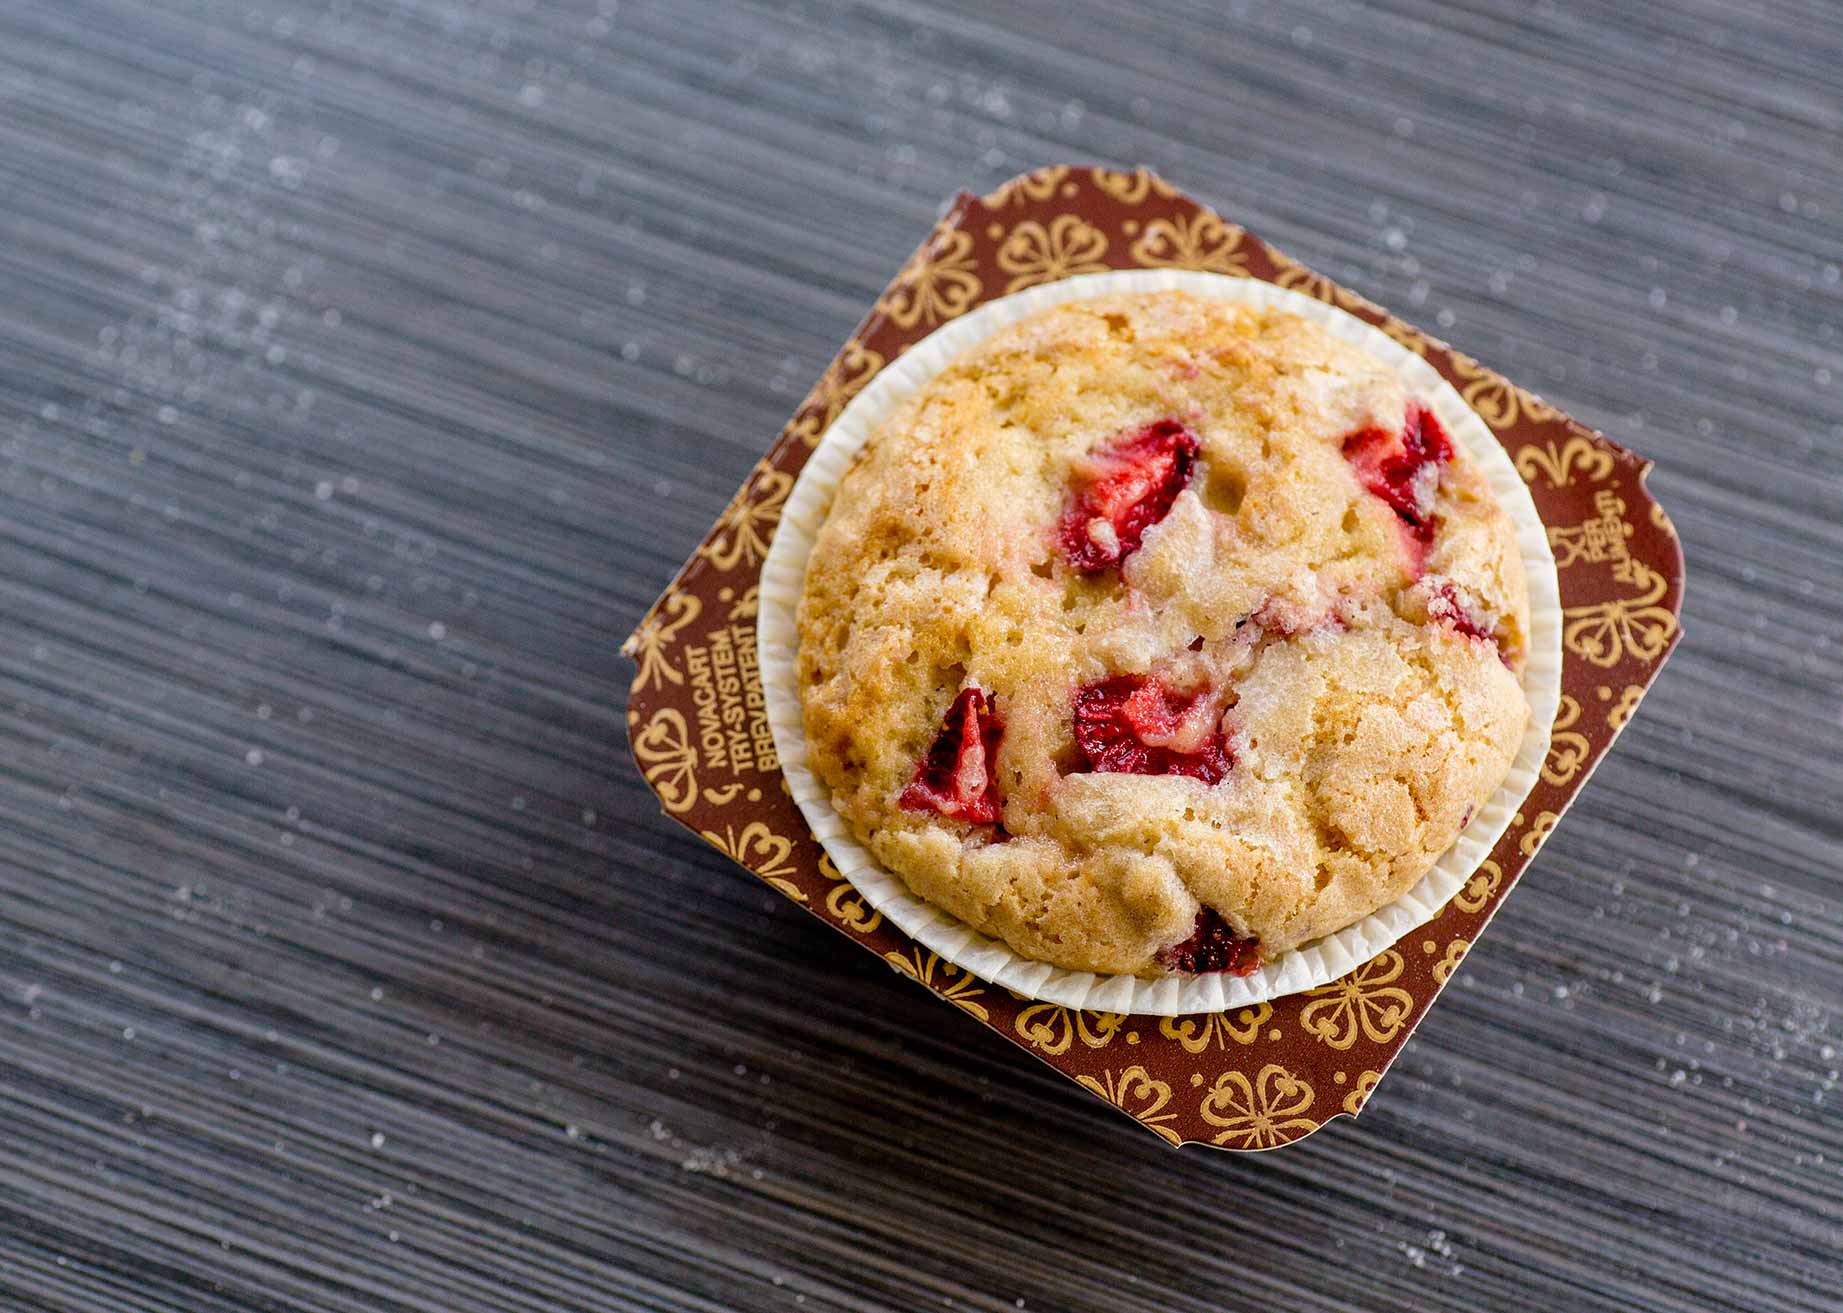 Novacart NTS muffin tray strawberry muffin